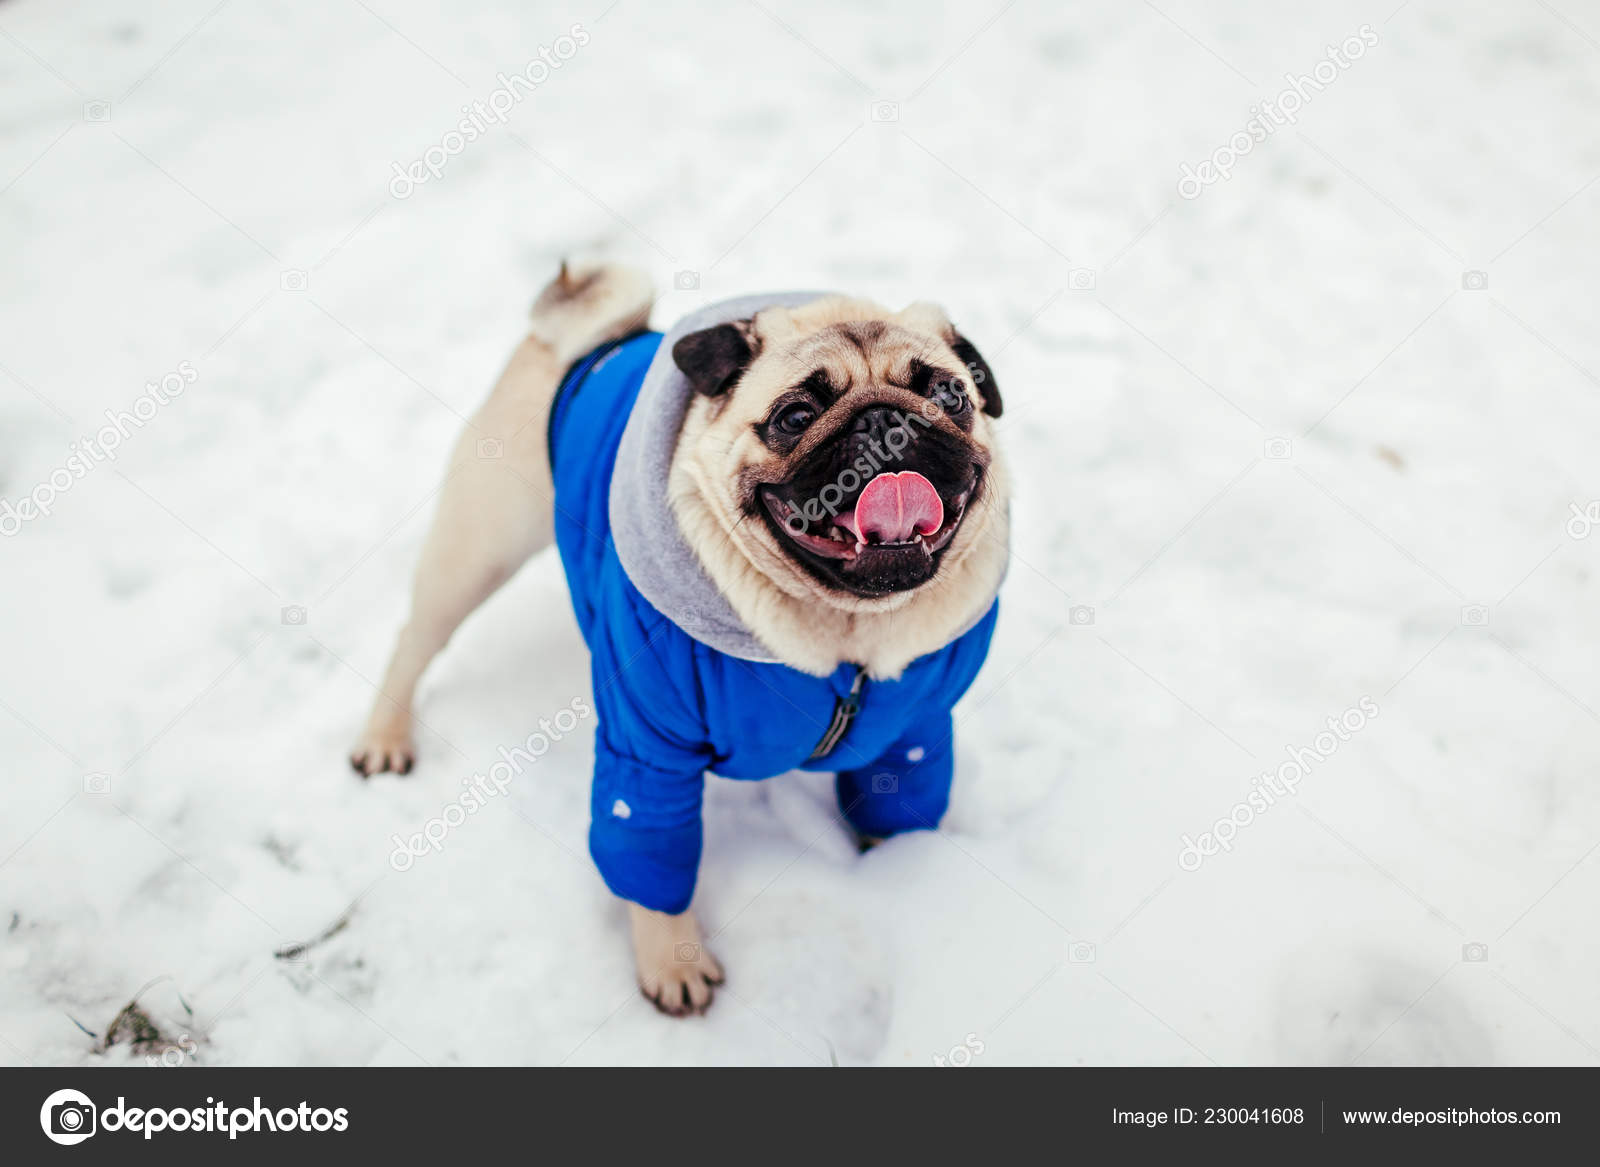 pug dog winter clothes